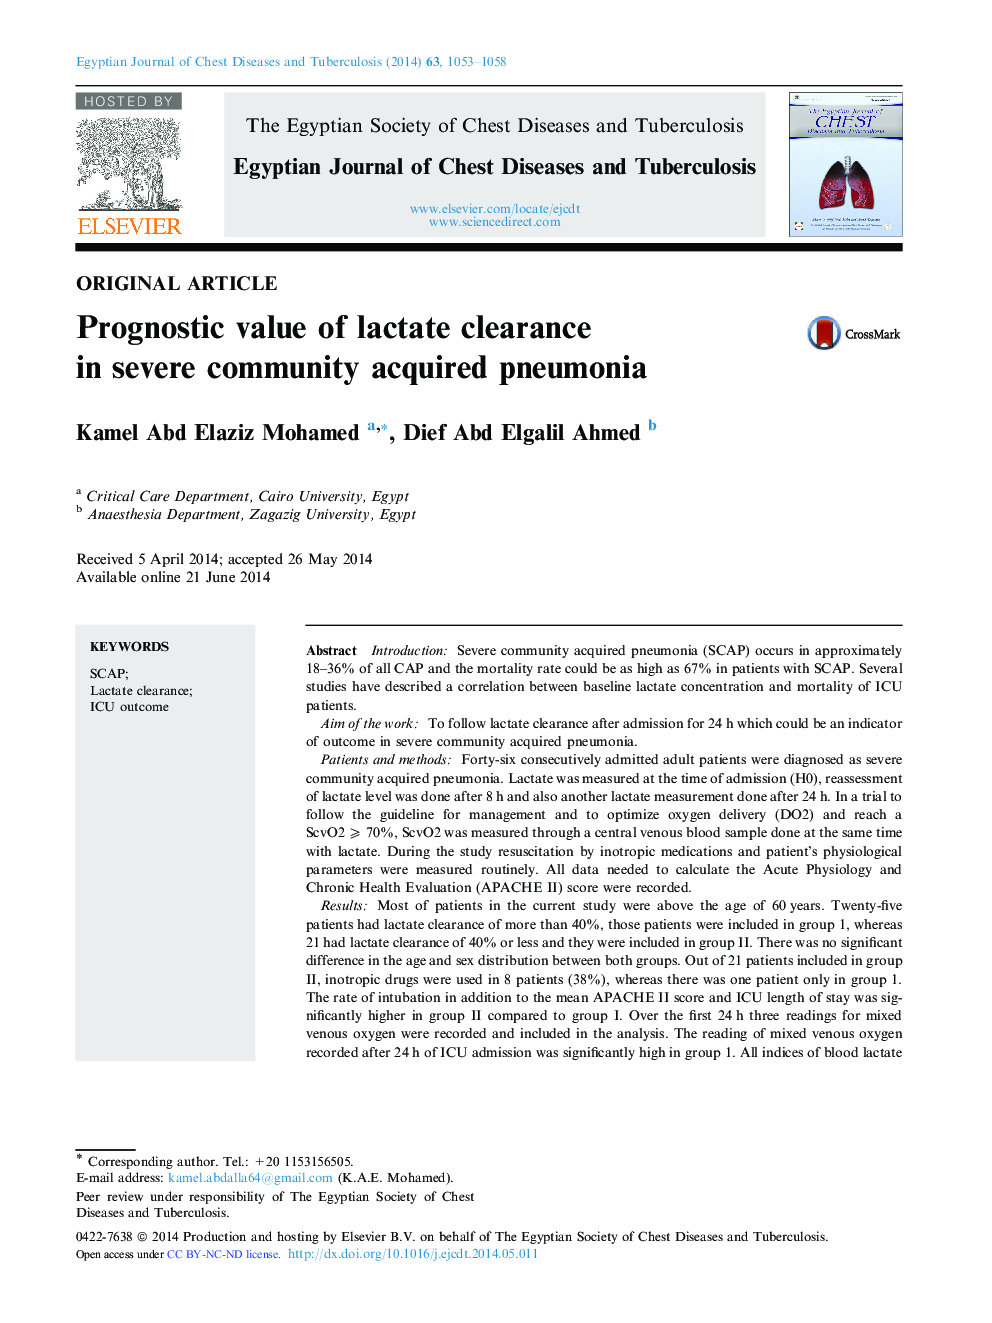 Prognostic value of lactate clearance in severe community acquired pneumonia 